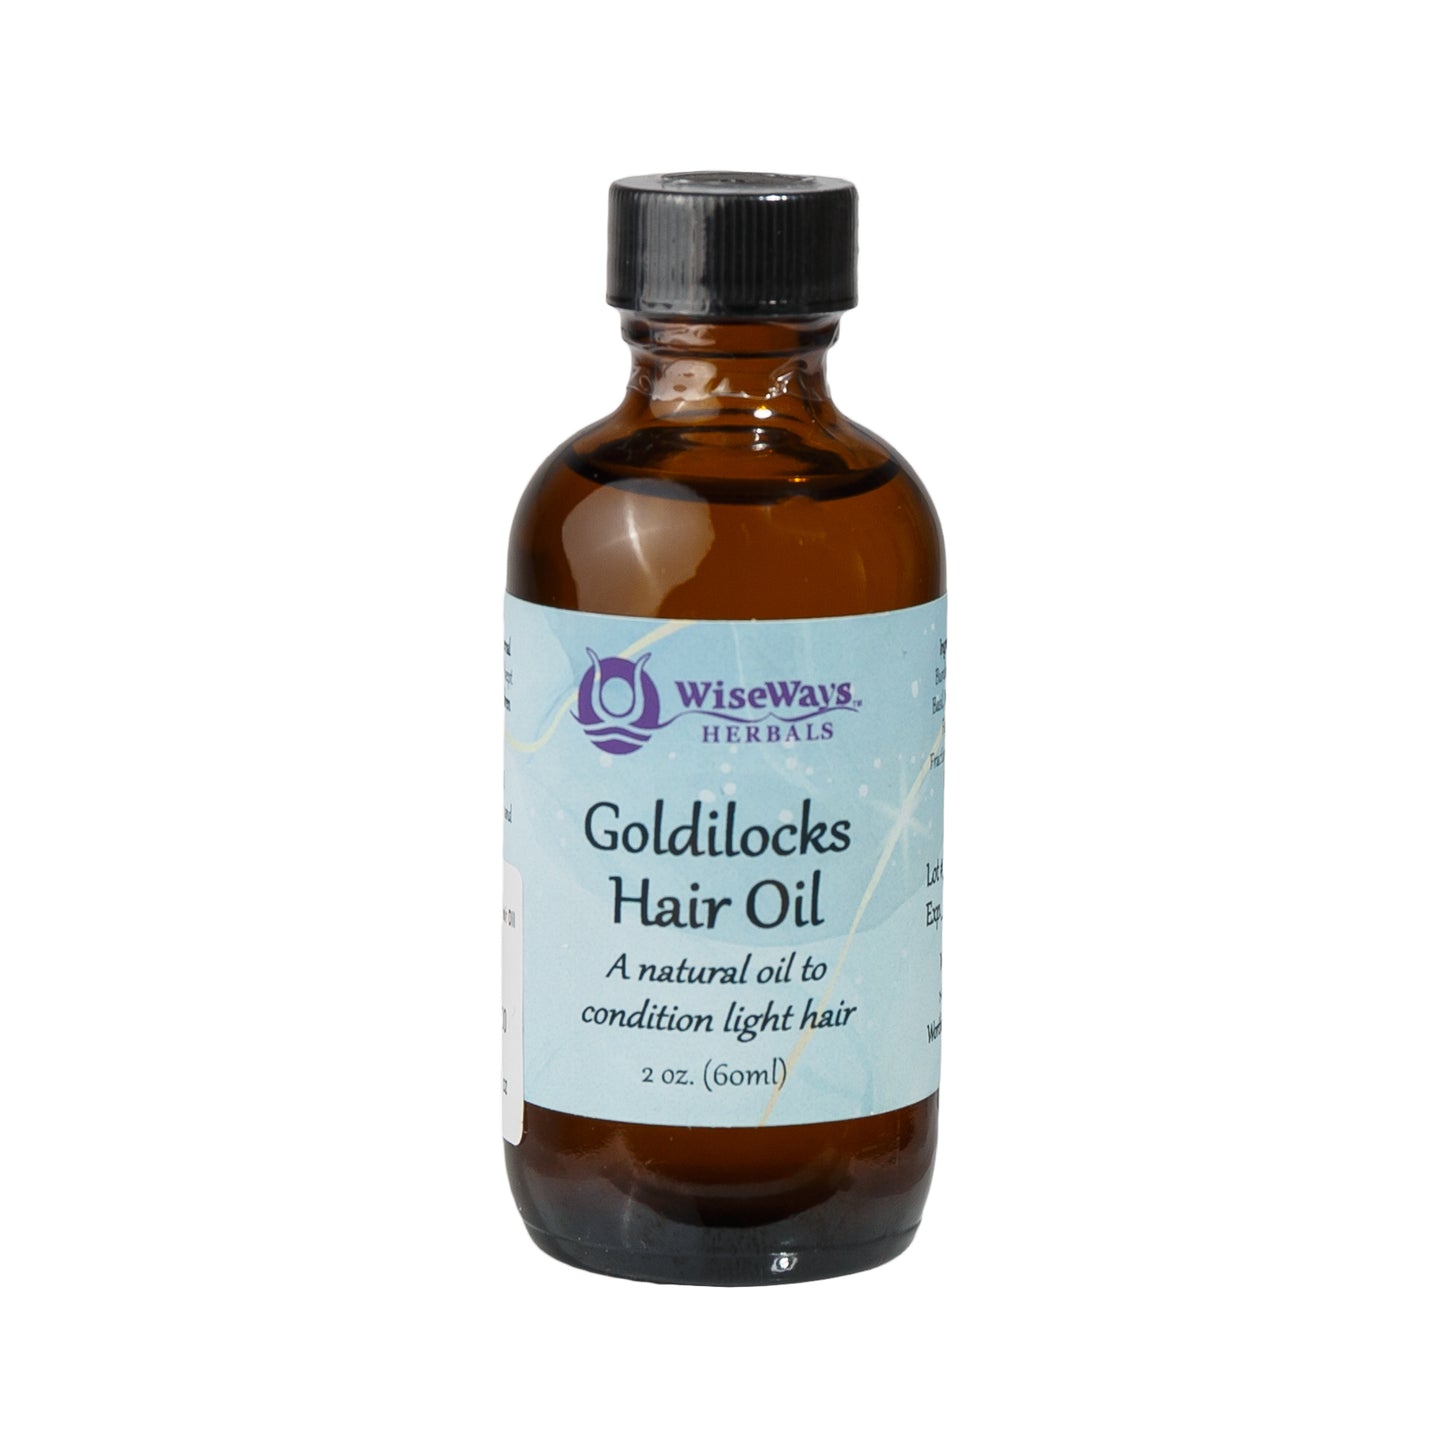 Primary Image of Goldilocks Hair Oil